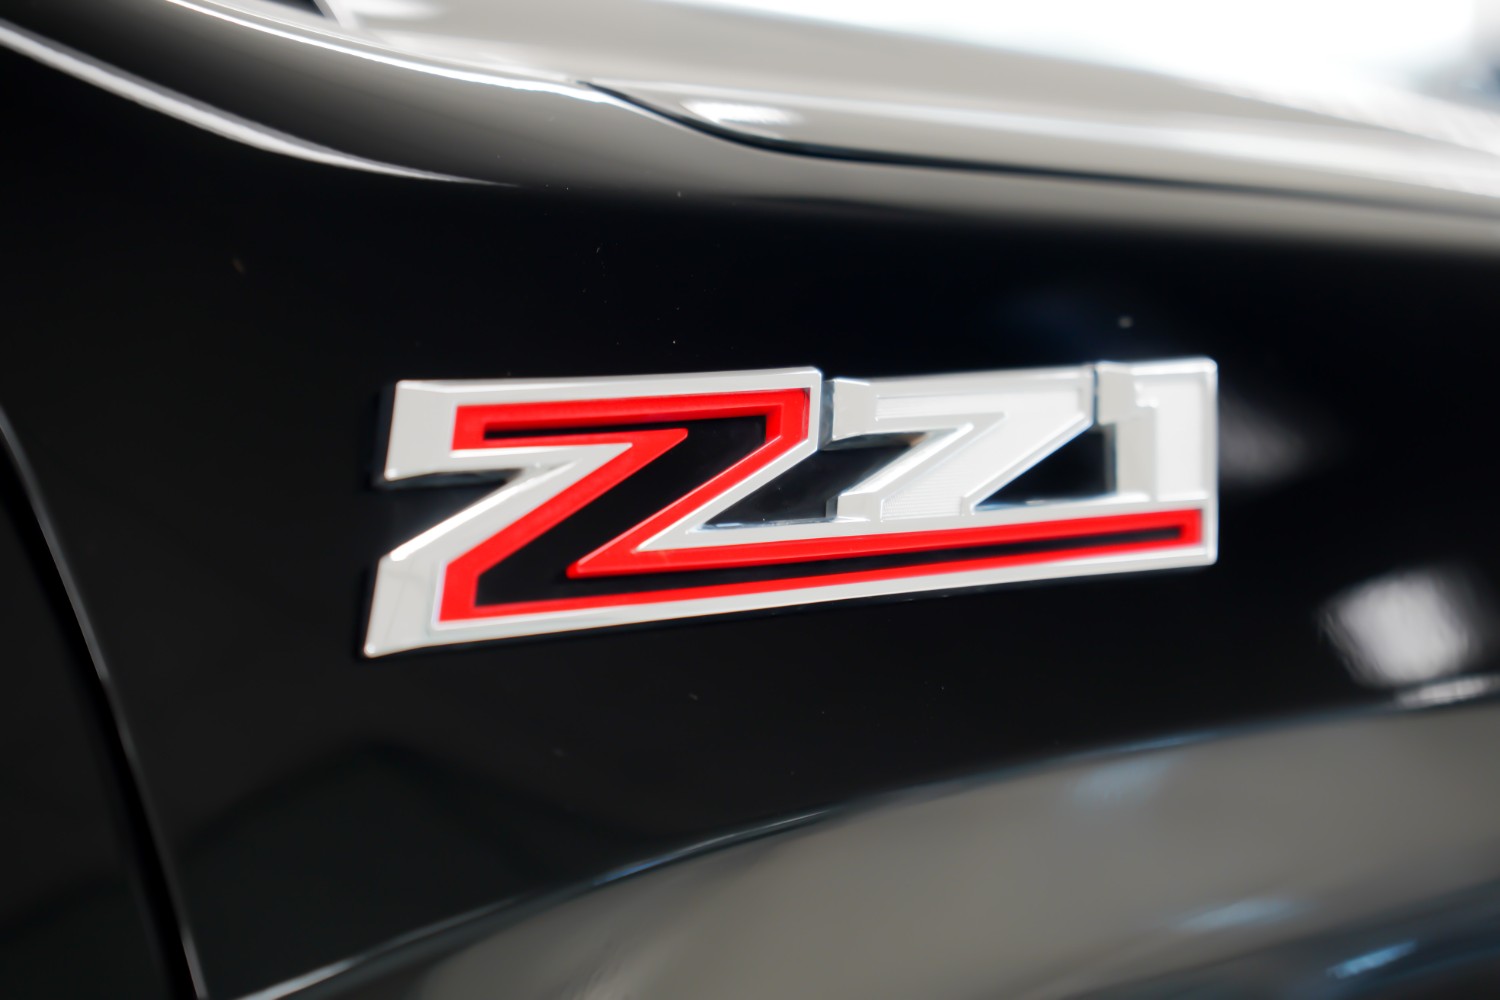 2020 Chevrolet Silverado T1 LTZ Premium Edition Ute Image 15